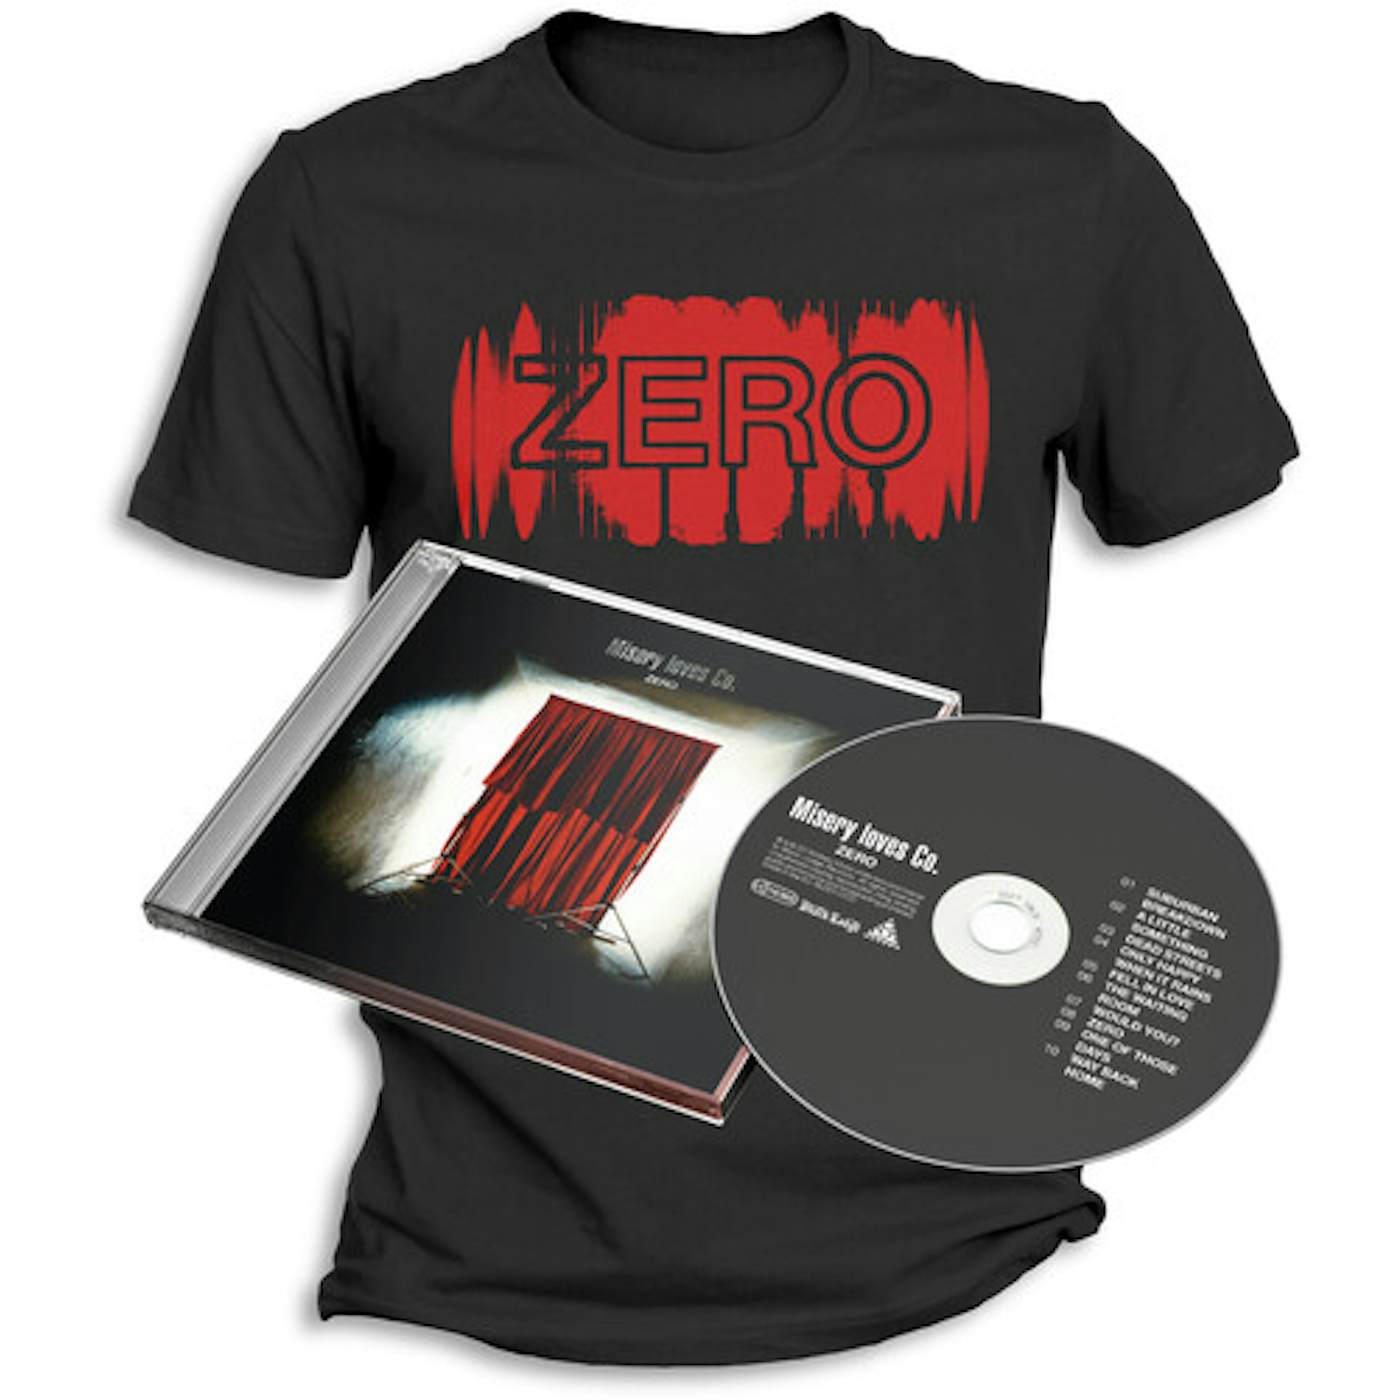 Misery Loves Co. ZERO + T-SHIRT CD - Shirt Included